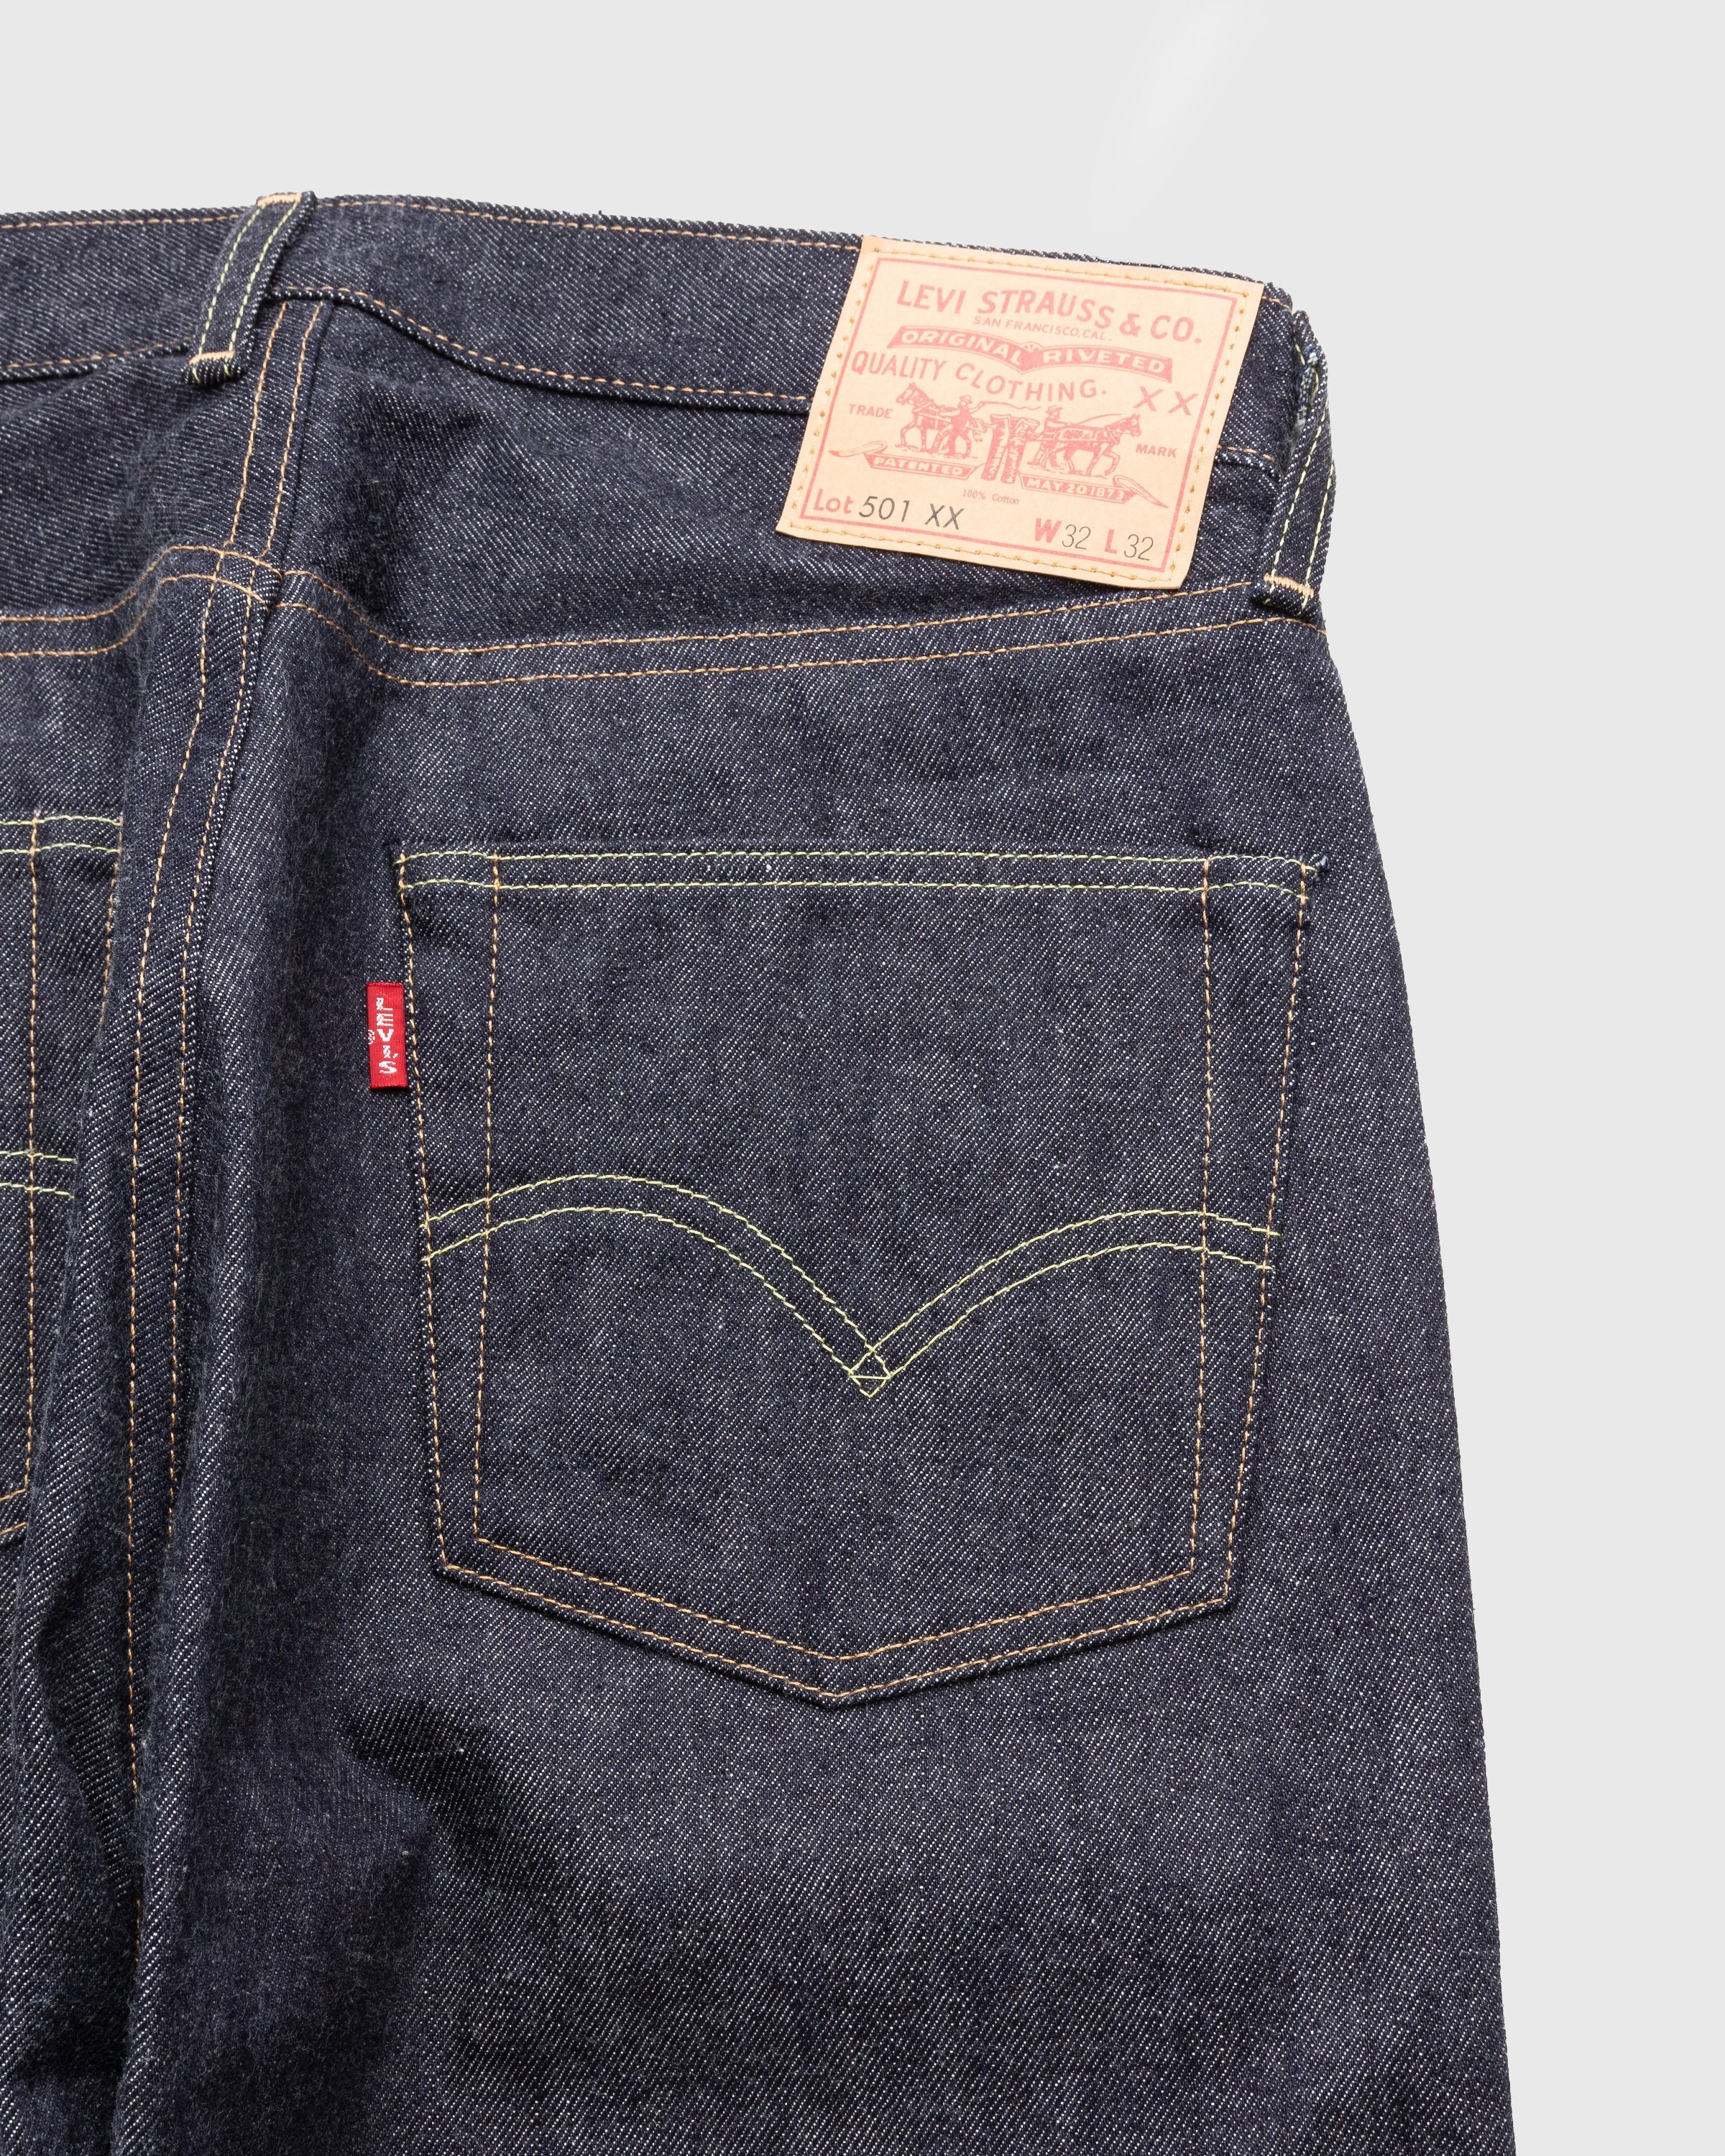 Levi's – 1963 501 Jeans Rigid Indigo Blue | Highsnobiety Shop